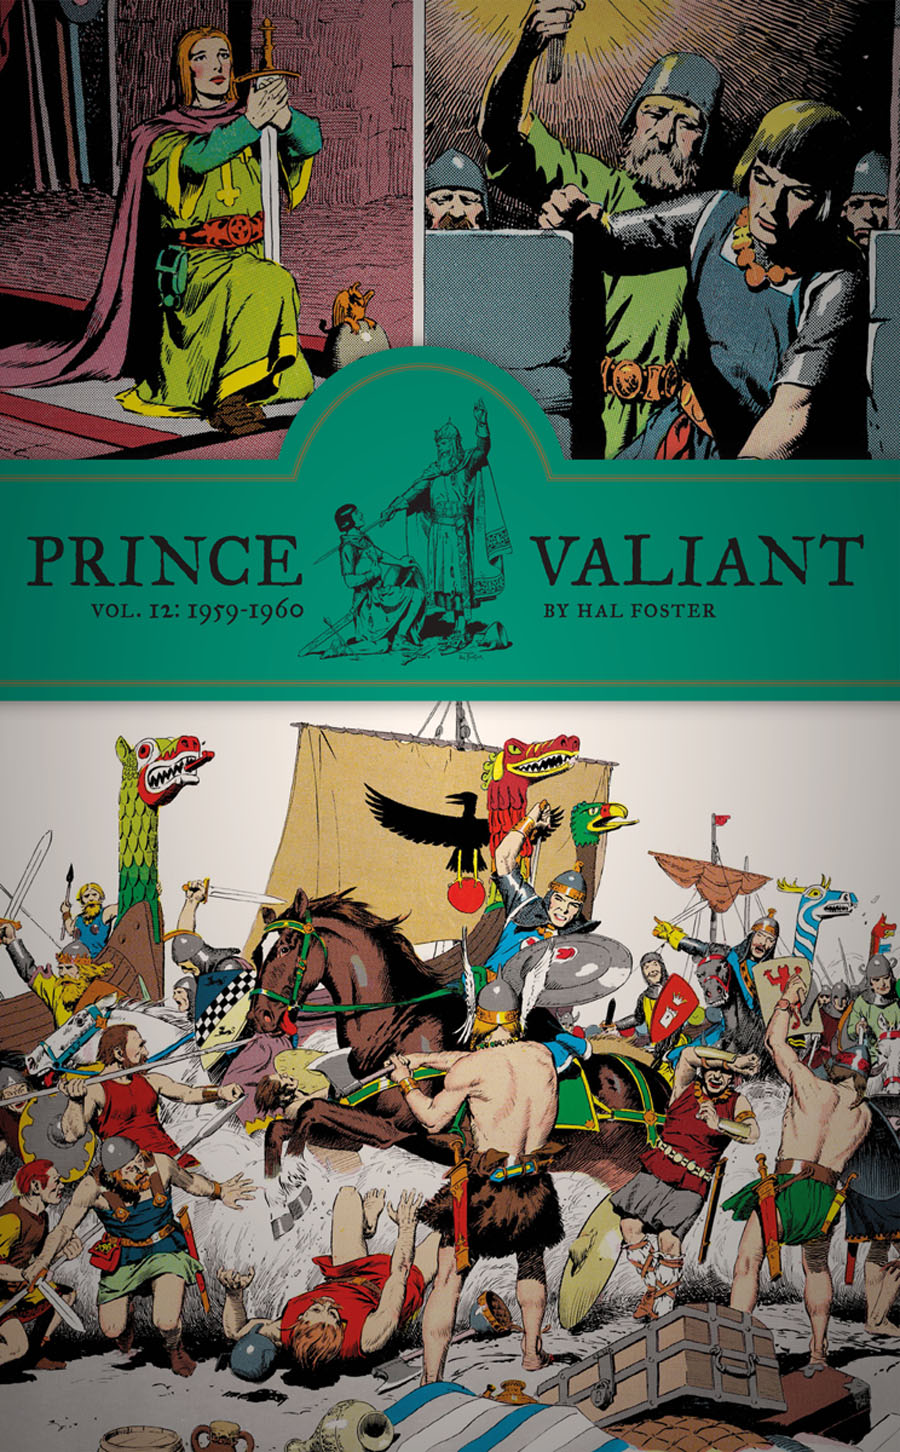 Prince Valiant Vol 12 1959-1960 HC